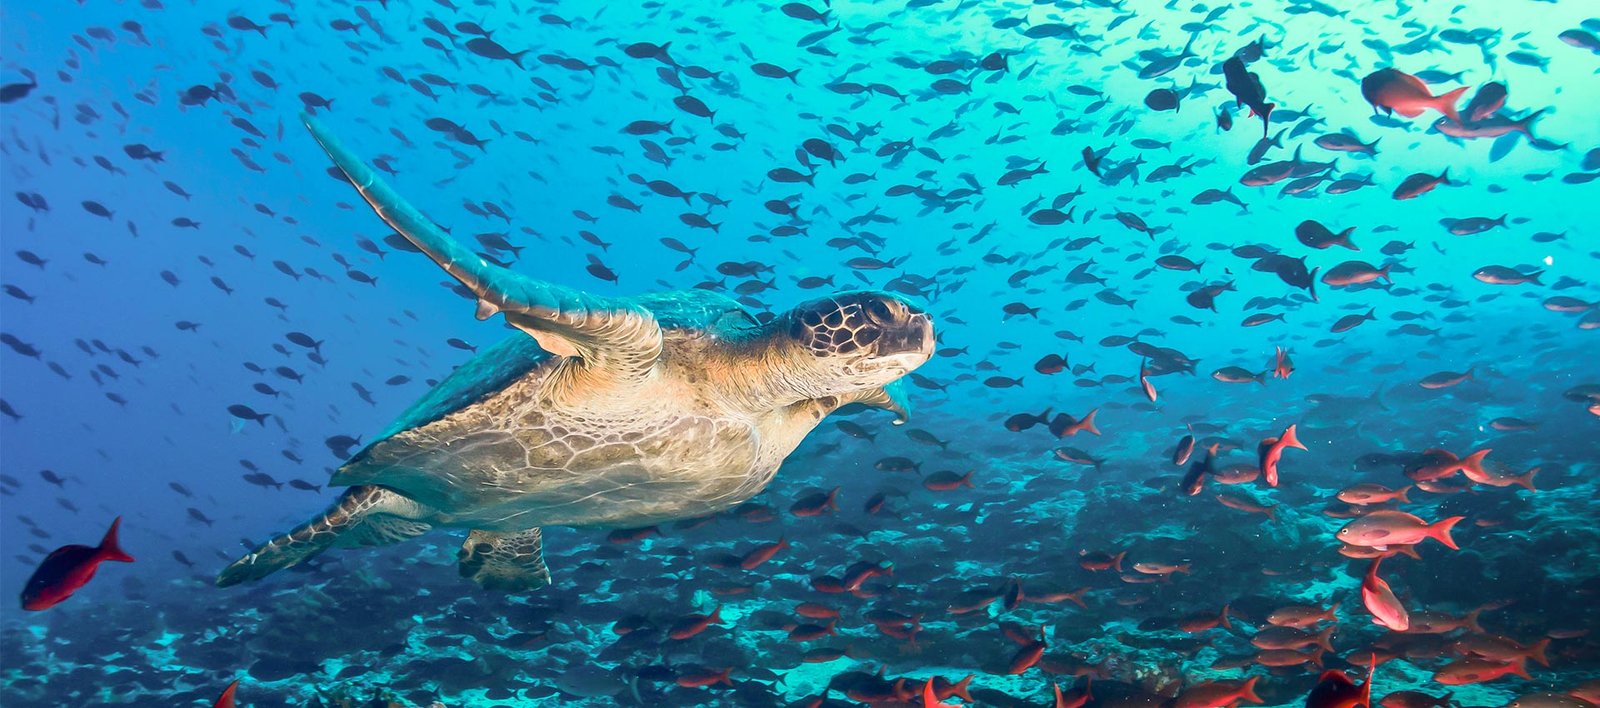 The Galápagos Islands: underwater in a giant aquarium